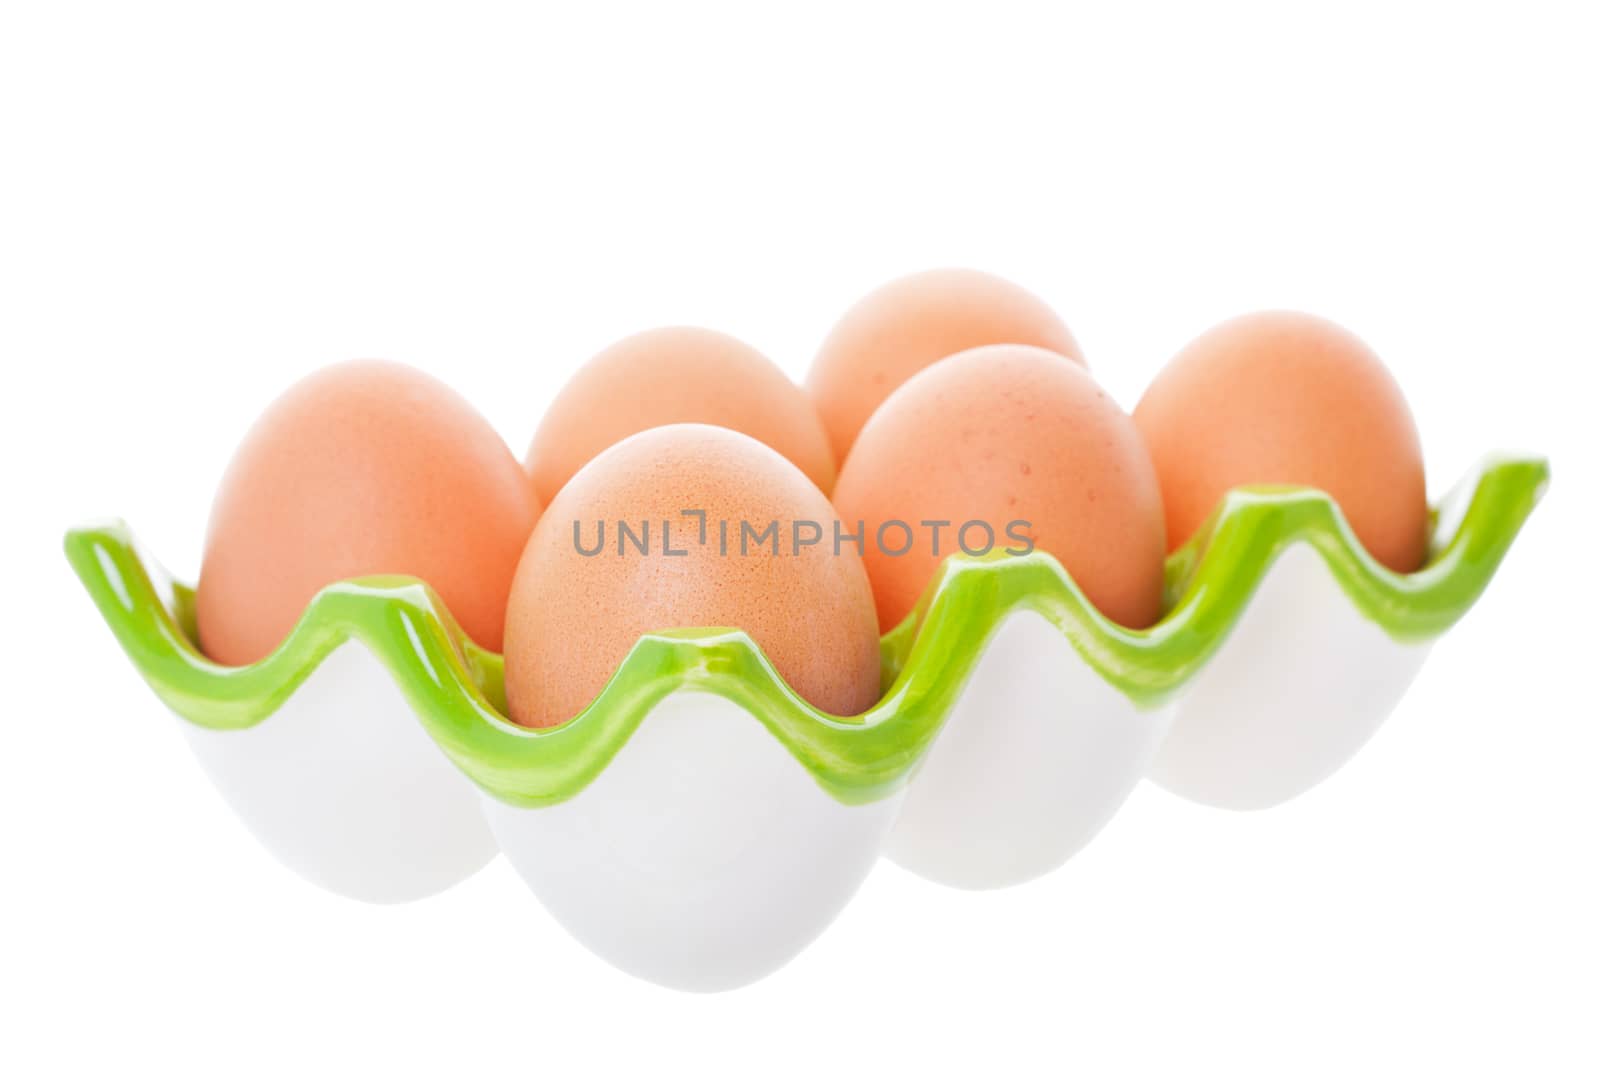 Half a dozen brown eggs in a green ceramic egg tray.  Shot on white background.